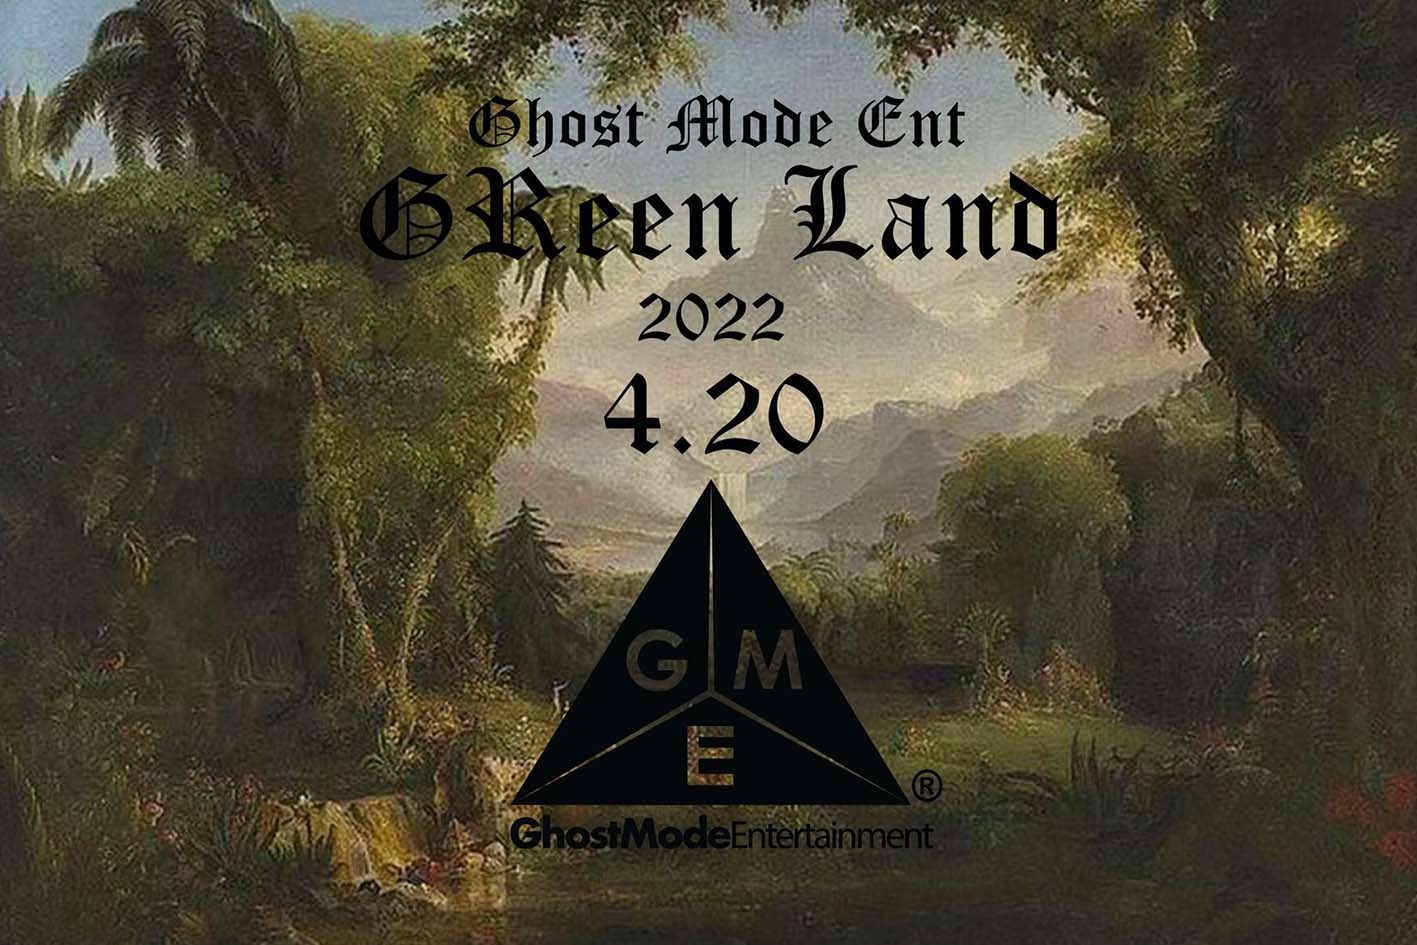 Ghost ModeEnt 首場派對演唱會「Green Land」購票情報